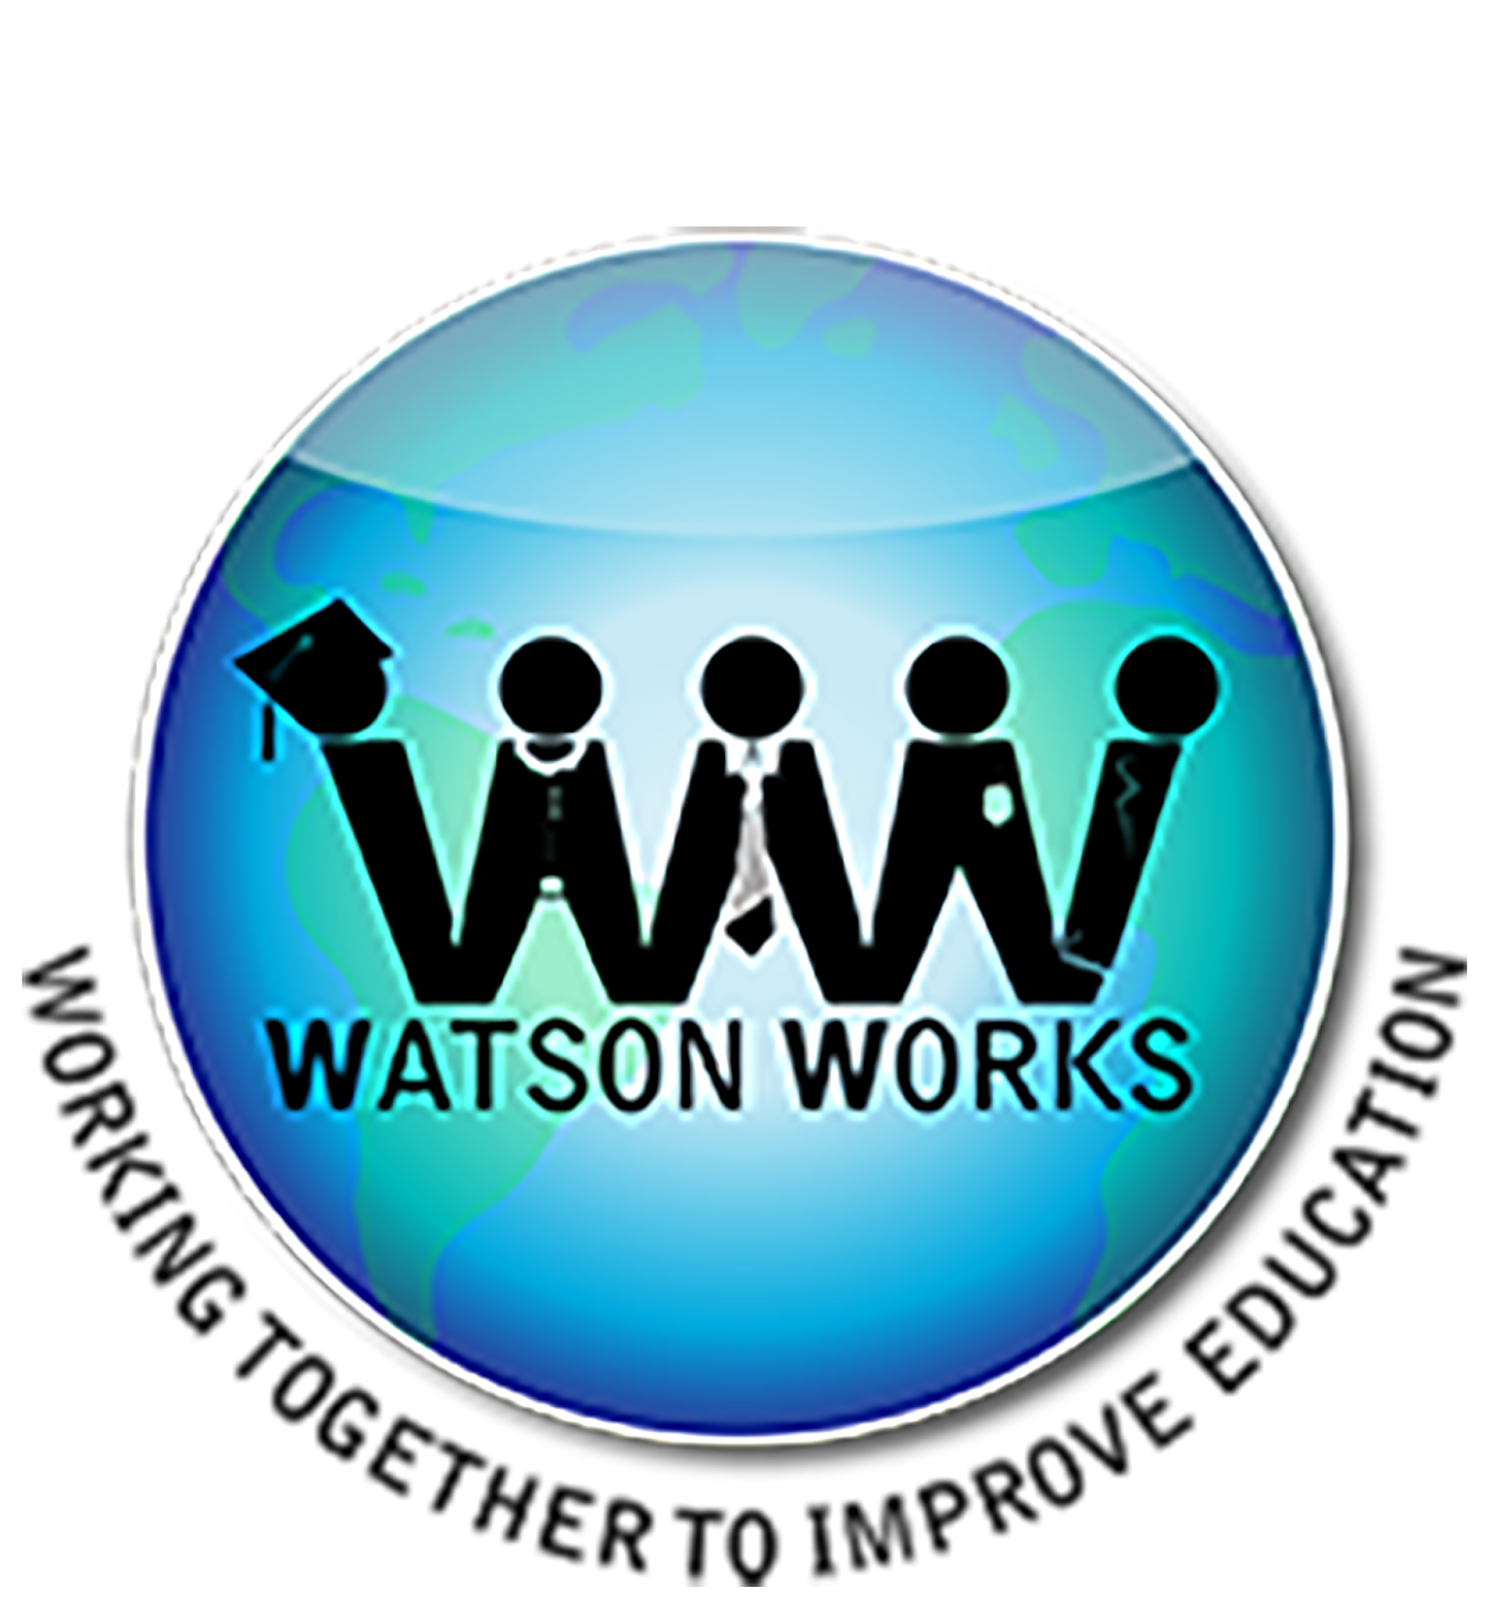 http://www.teacherspayteachers.com/Store/Watson-Works